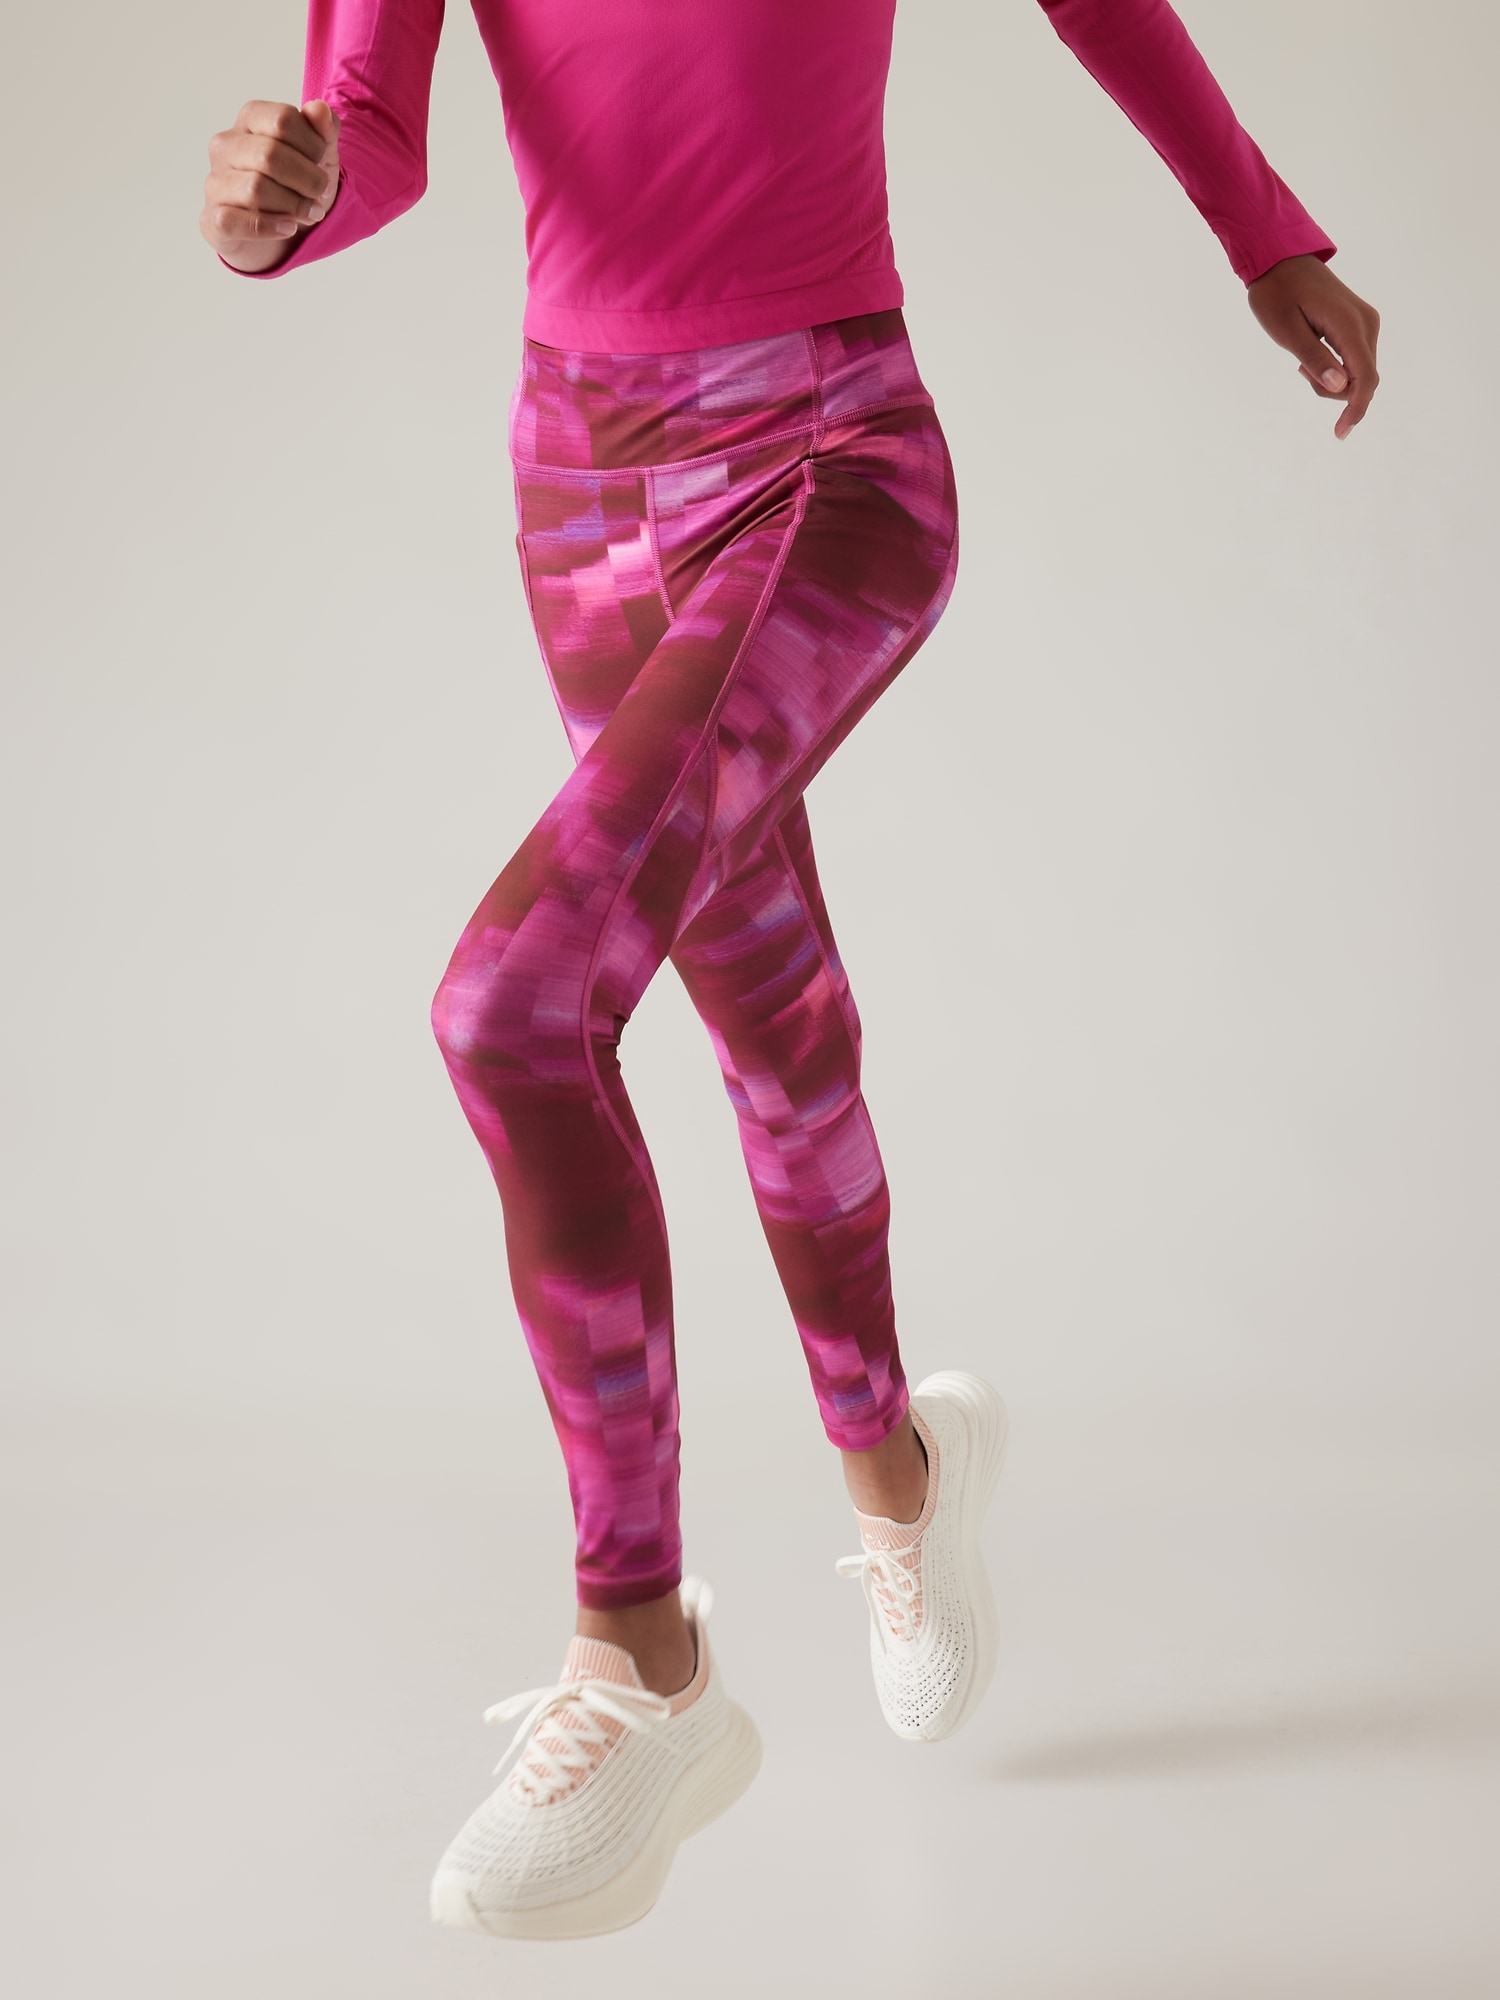 Athleta Women's Abstract Print Athletic Leggings Multicolor Size